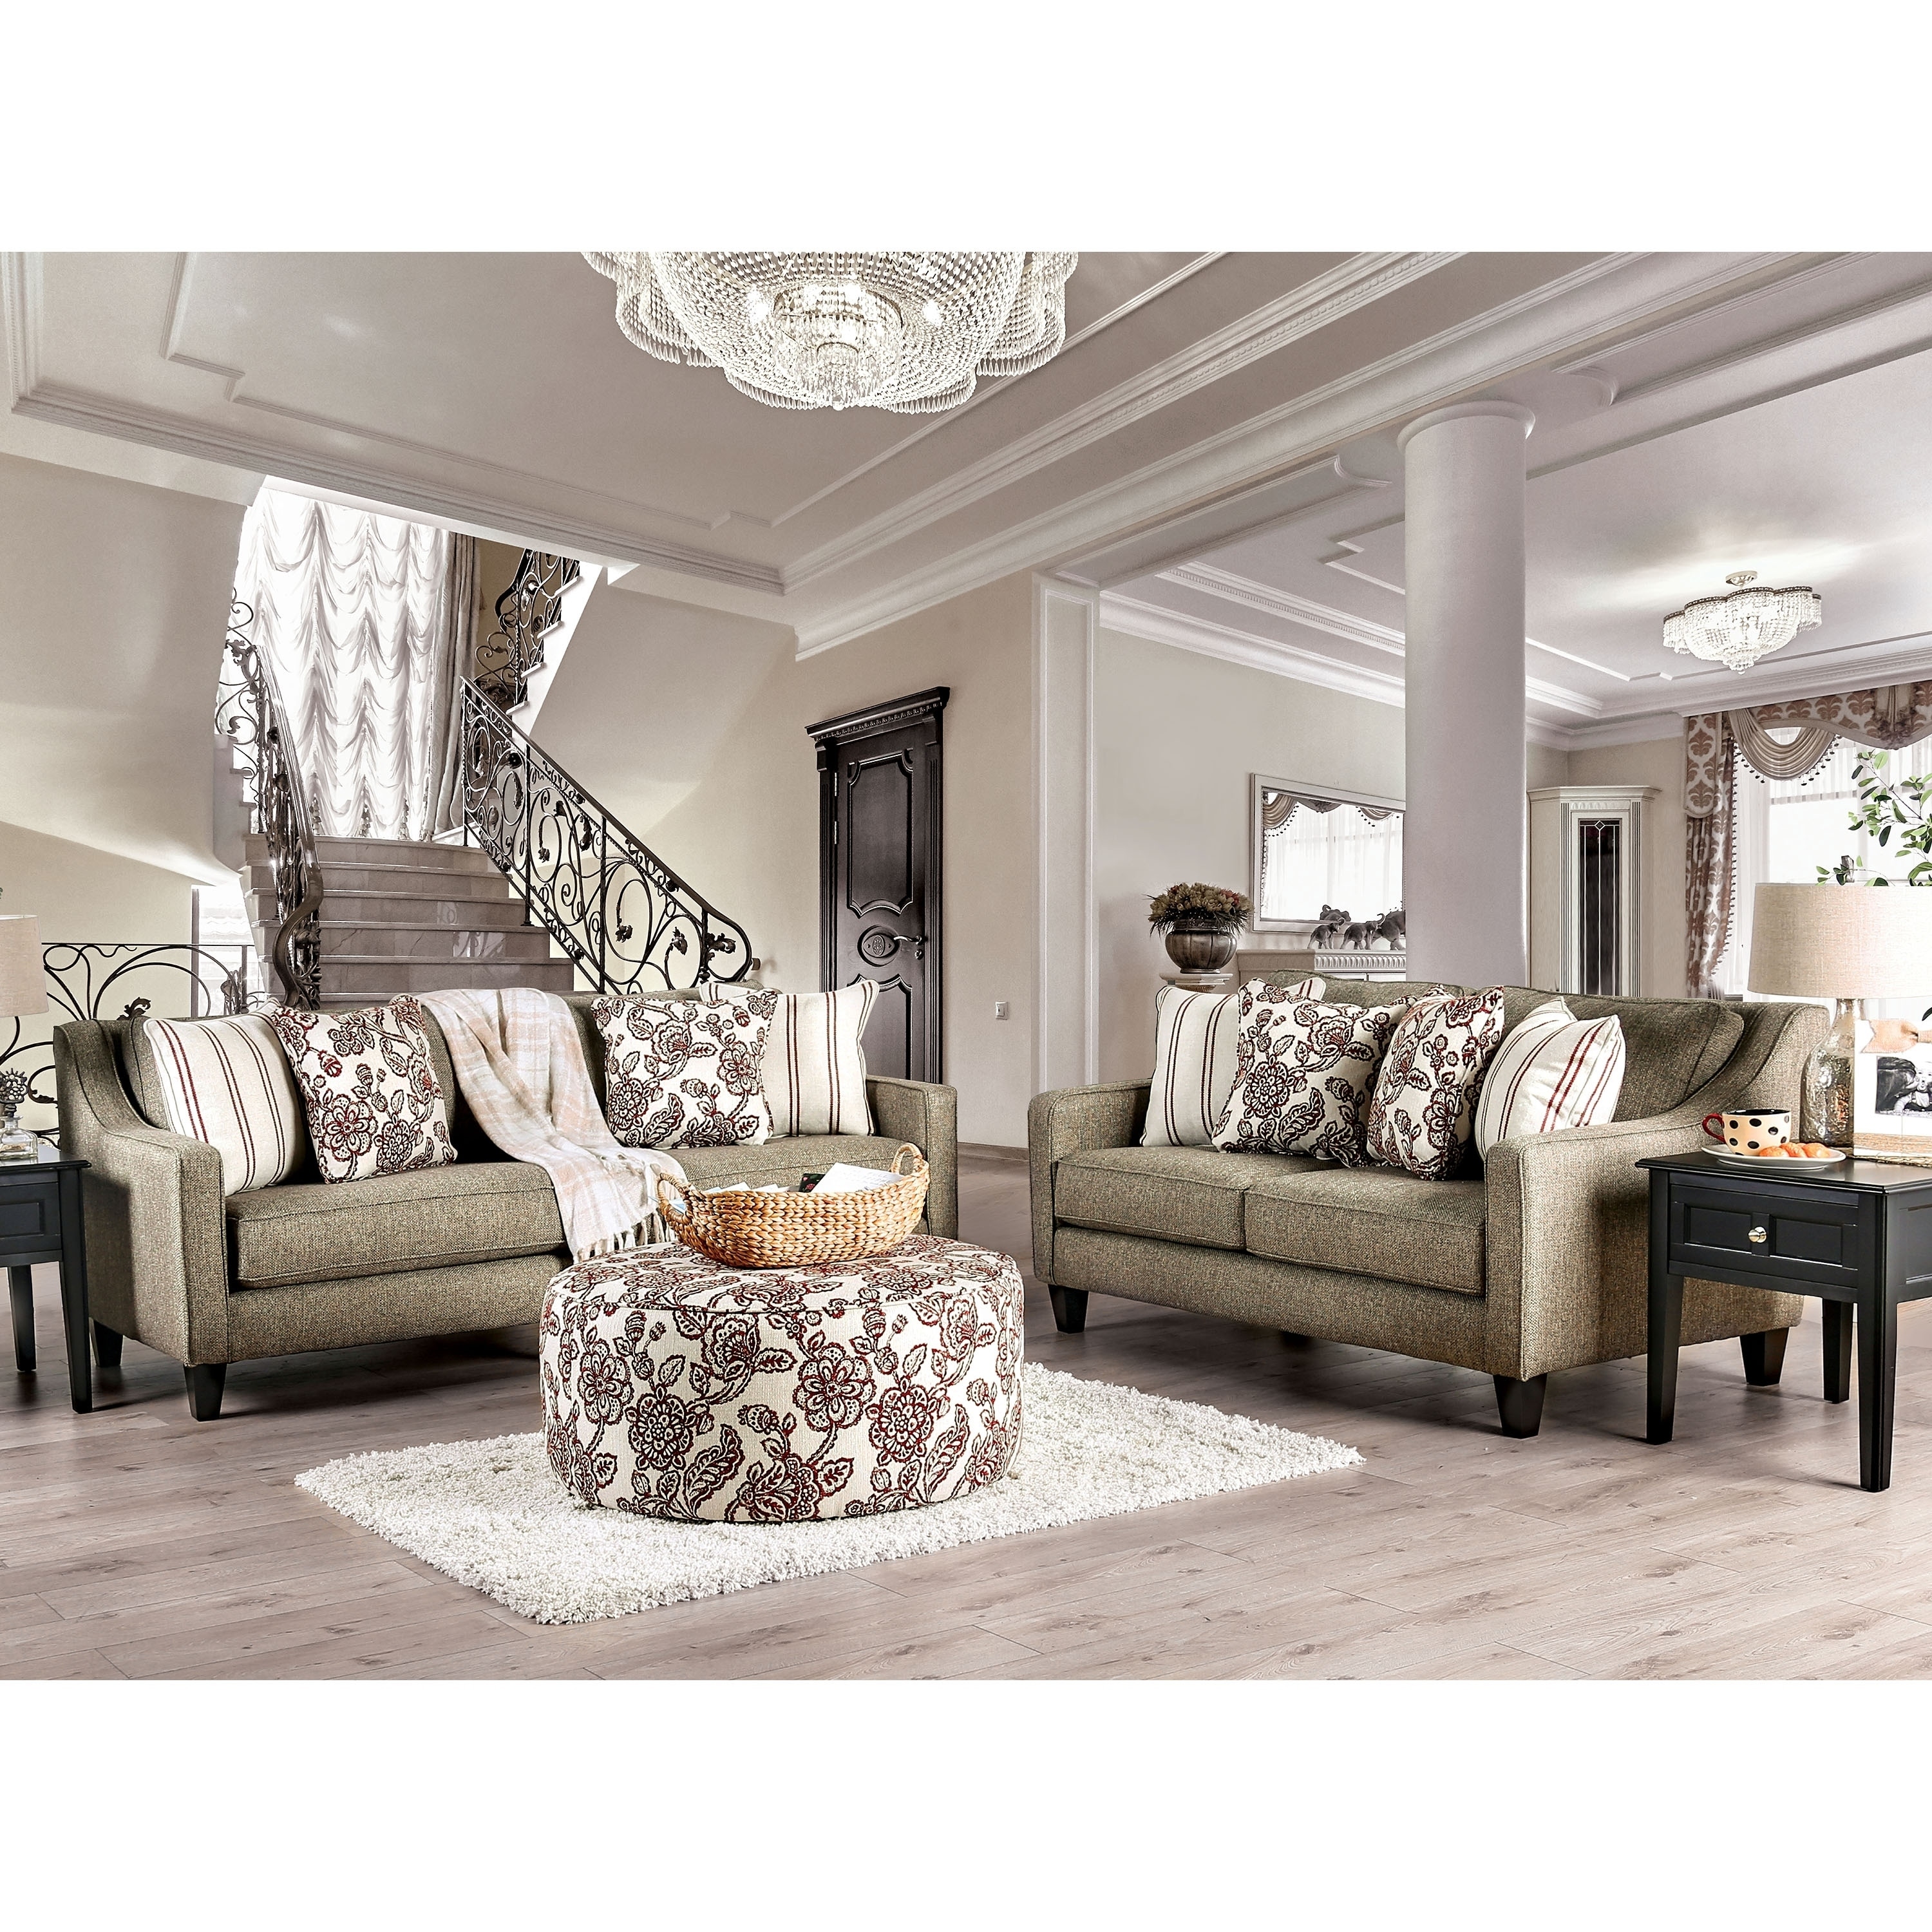 Furniture Of America Chervono Rustic 2 Piece Living Room Set On Sale Overstock 28408657